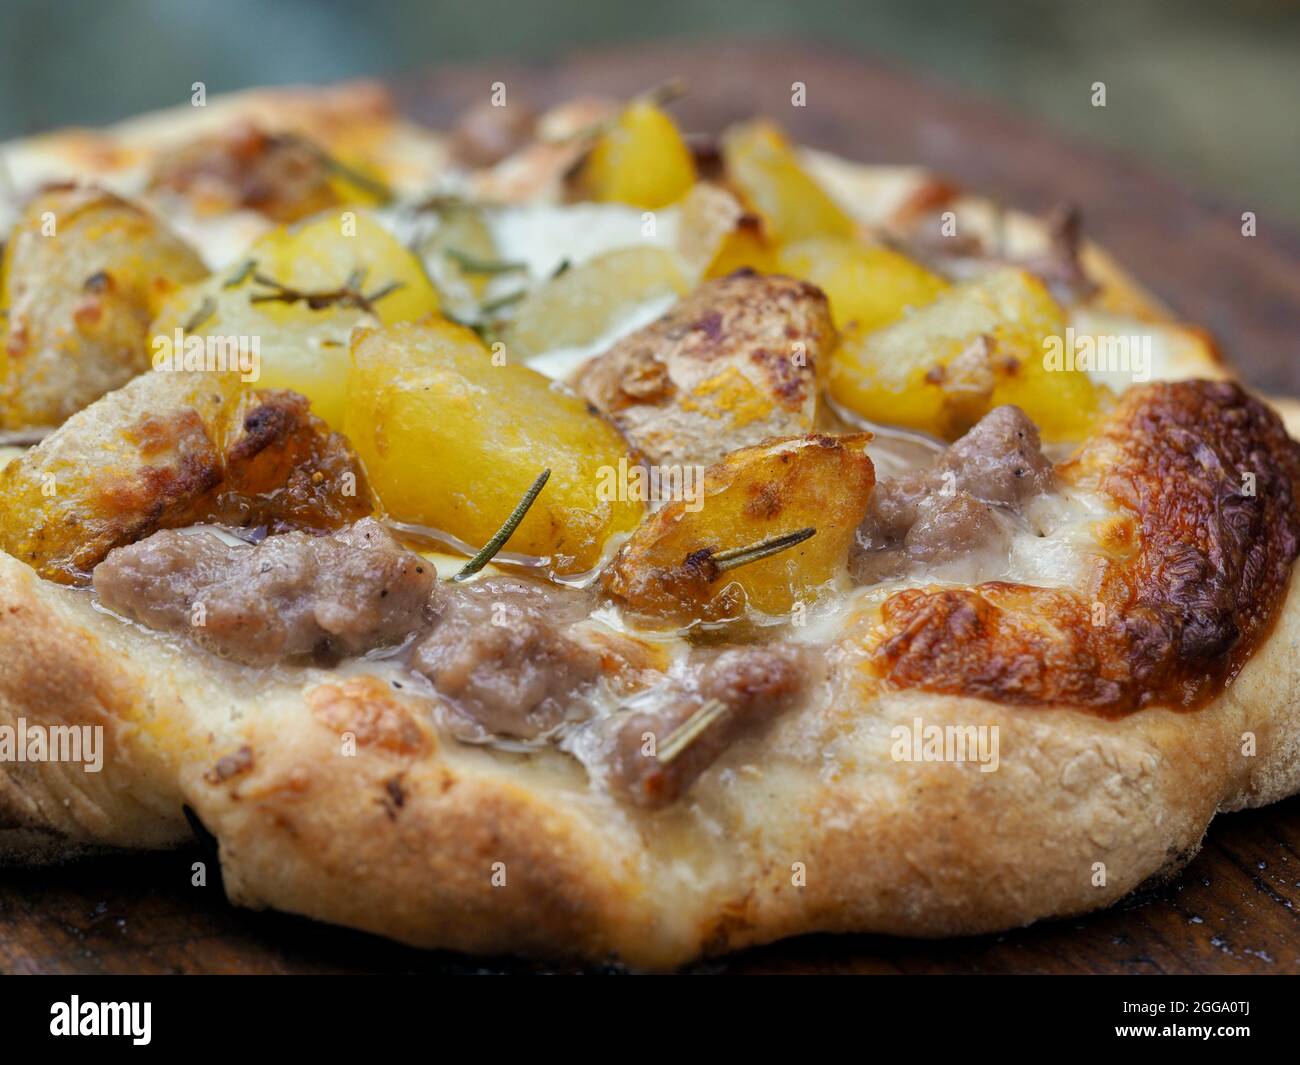 Homemade pizza Stock Photo